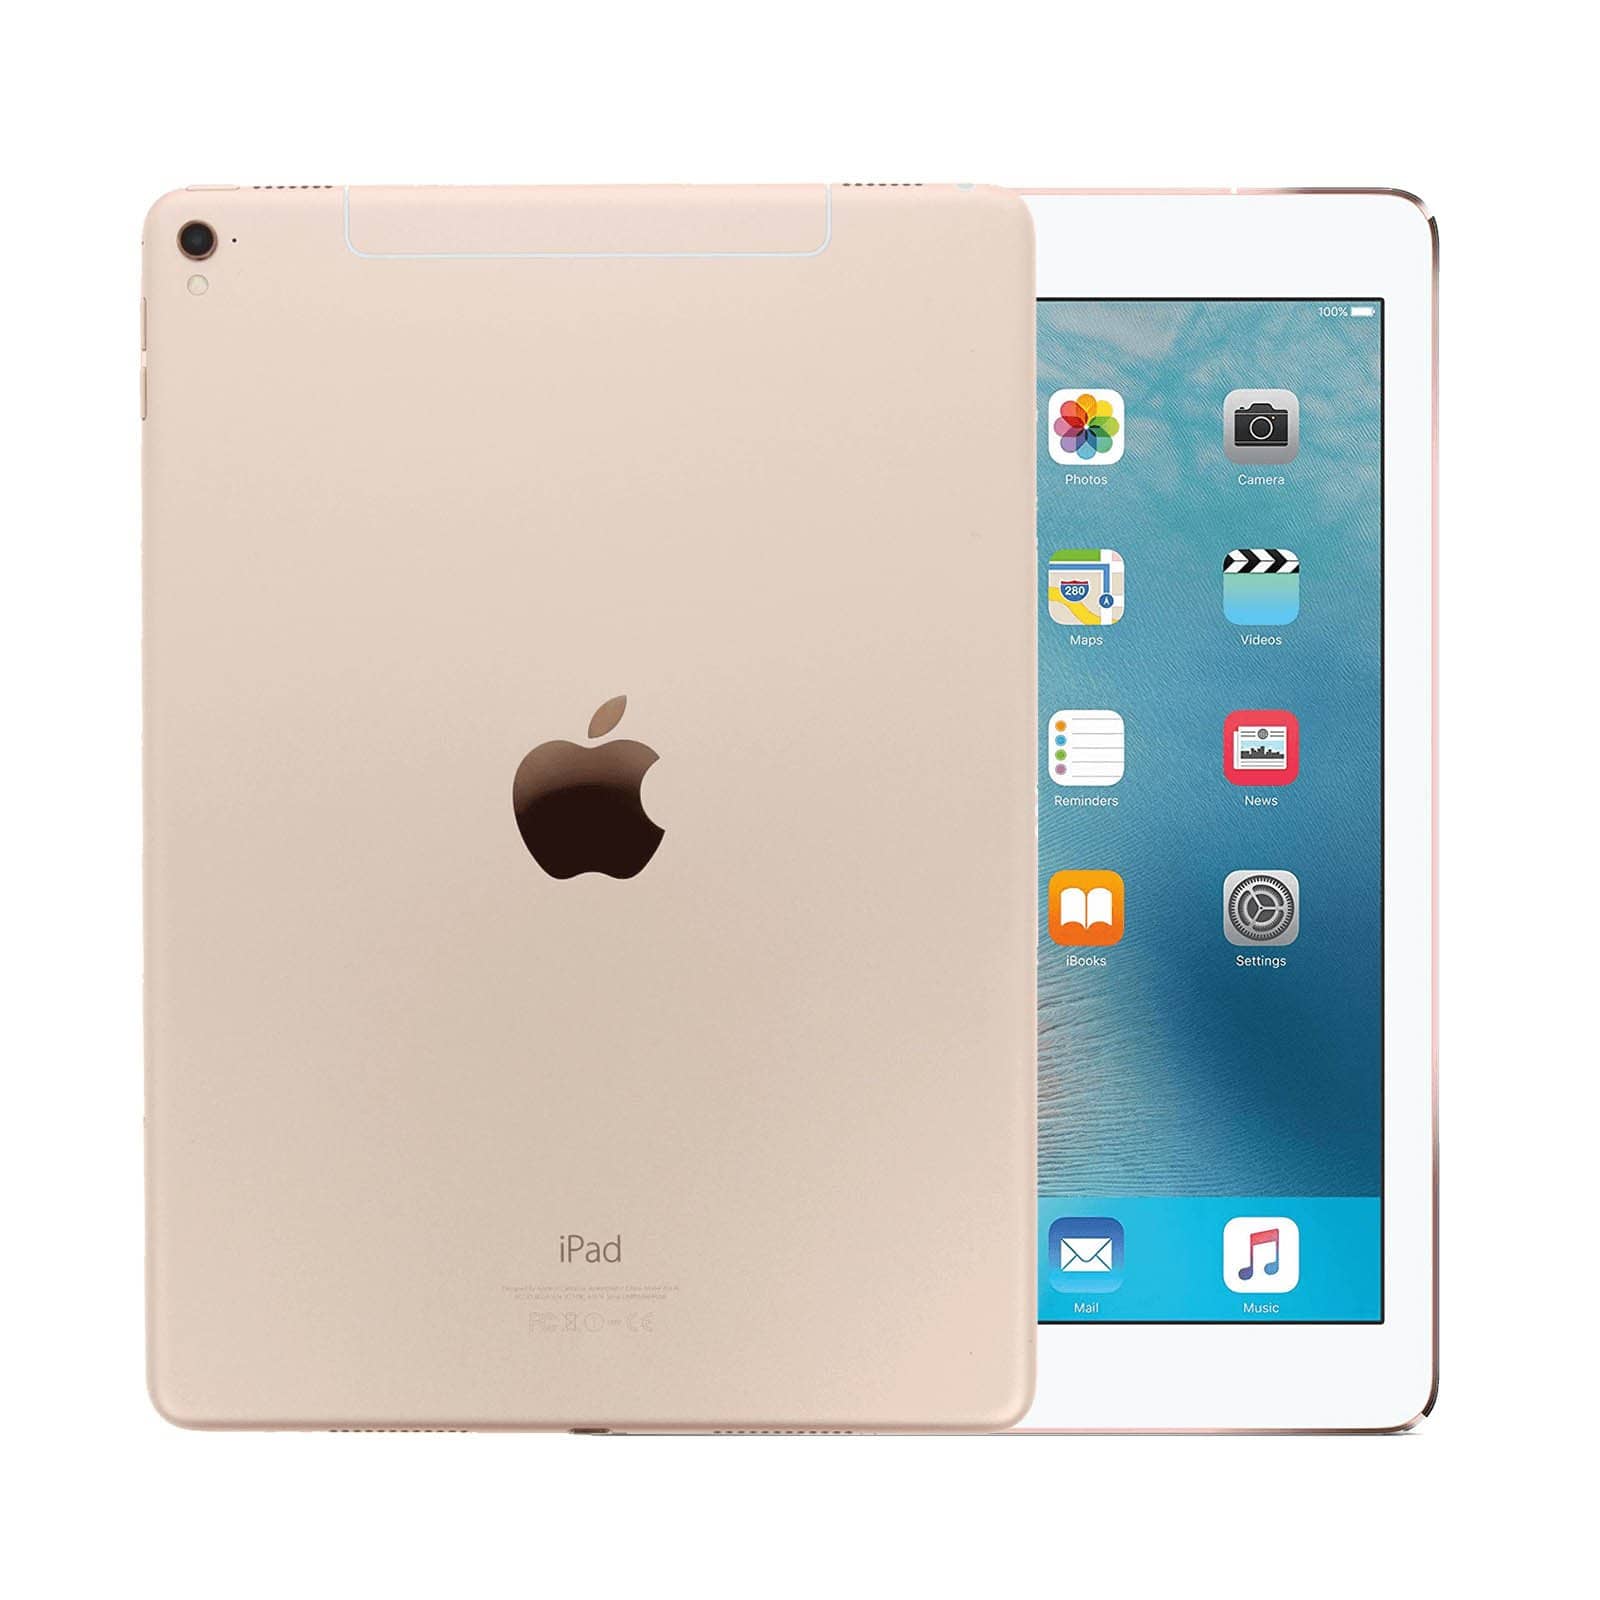 iPad Pro 9.7 Inch 256GB Gold Very Good - Unlocked 256GB Gold Very Good